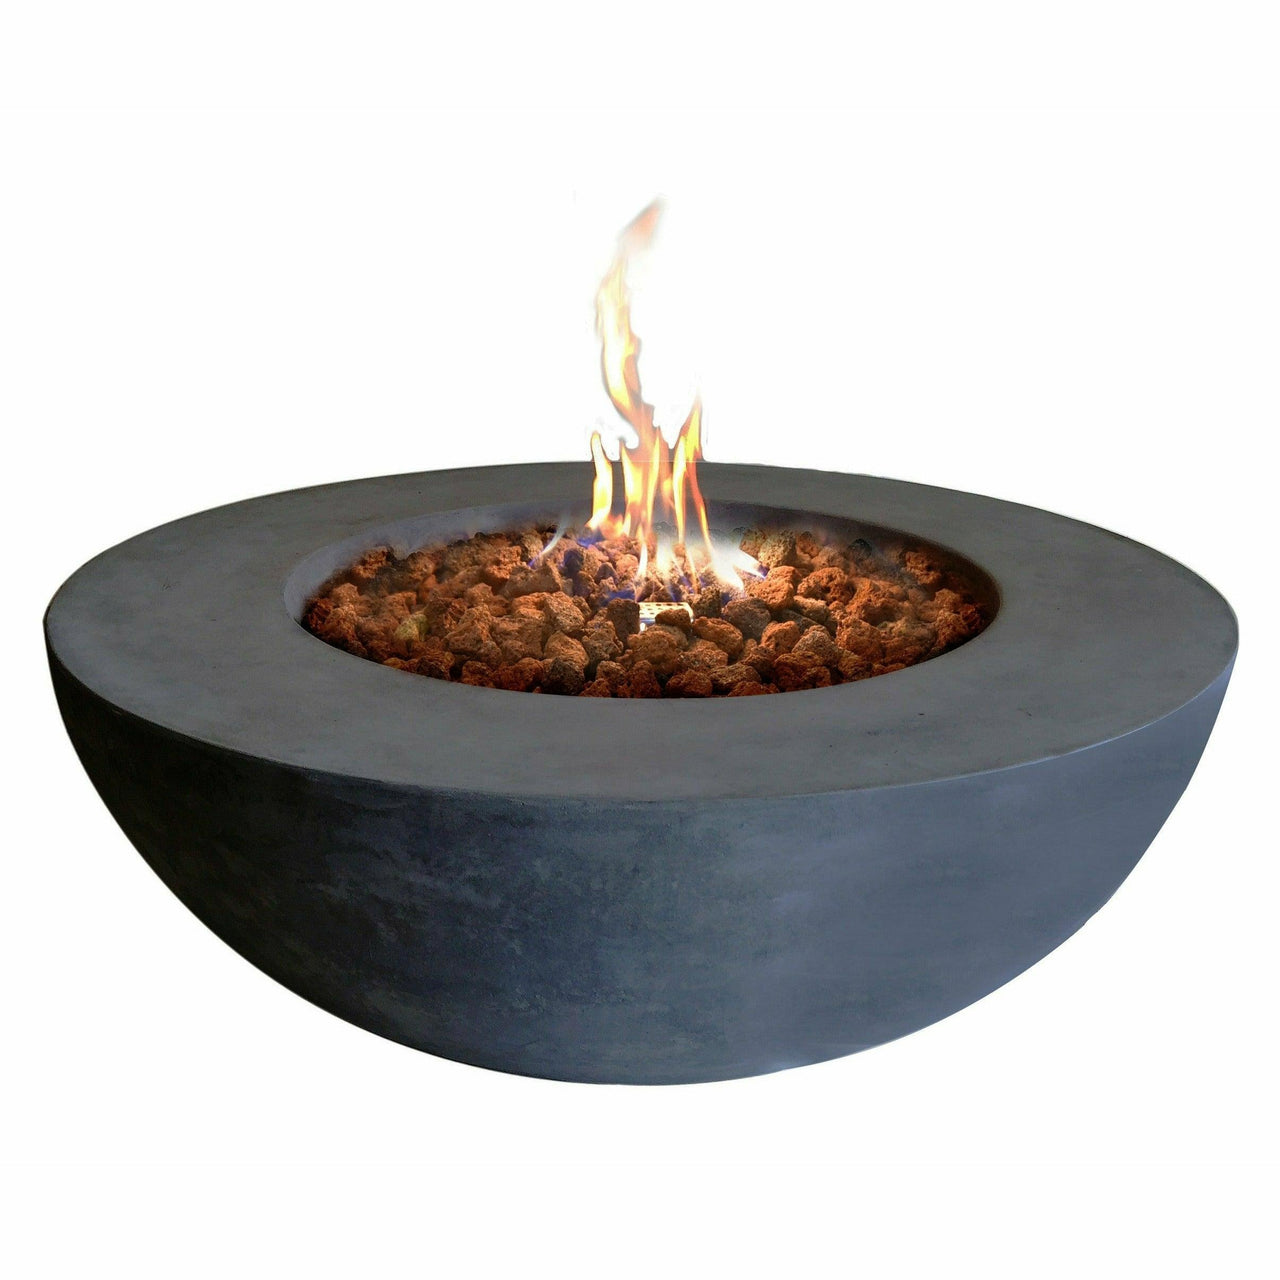 Elementi - Lunar Round Concrete Fire Pit Table OFG101 - Fire Pit Stock